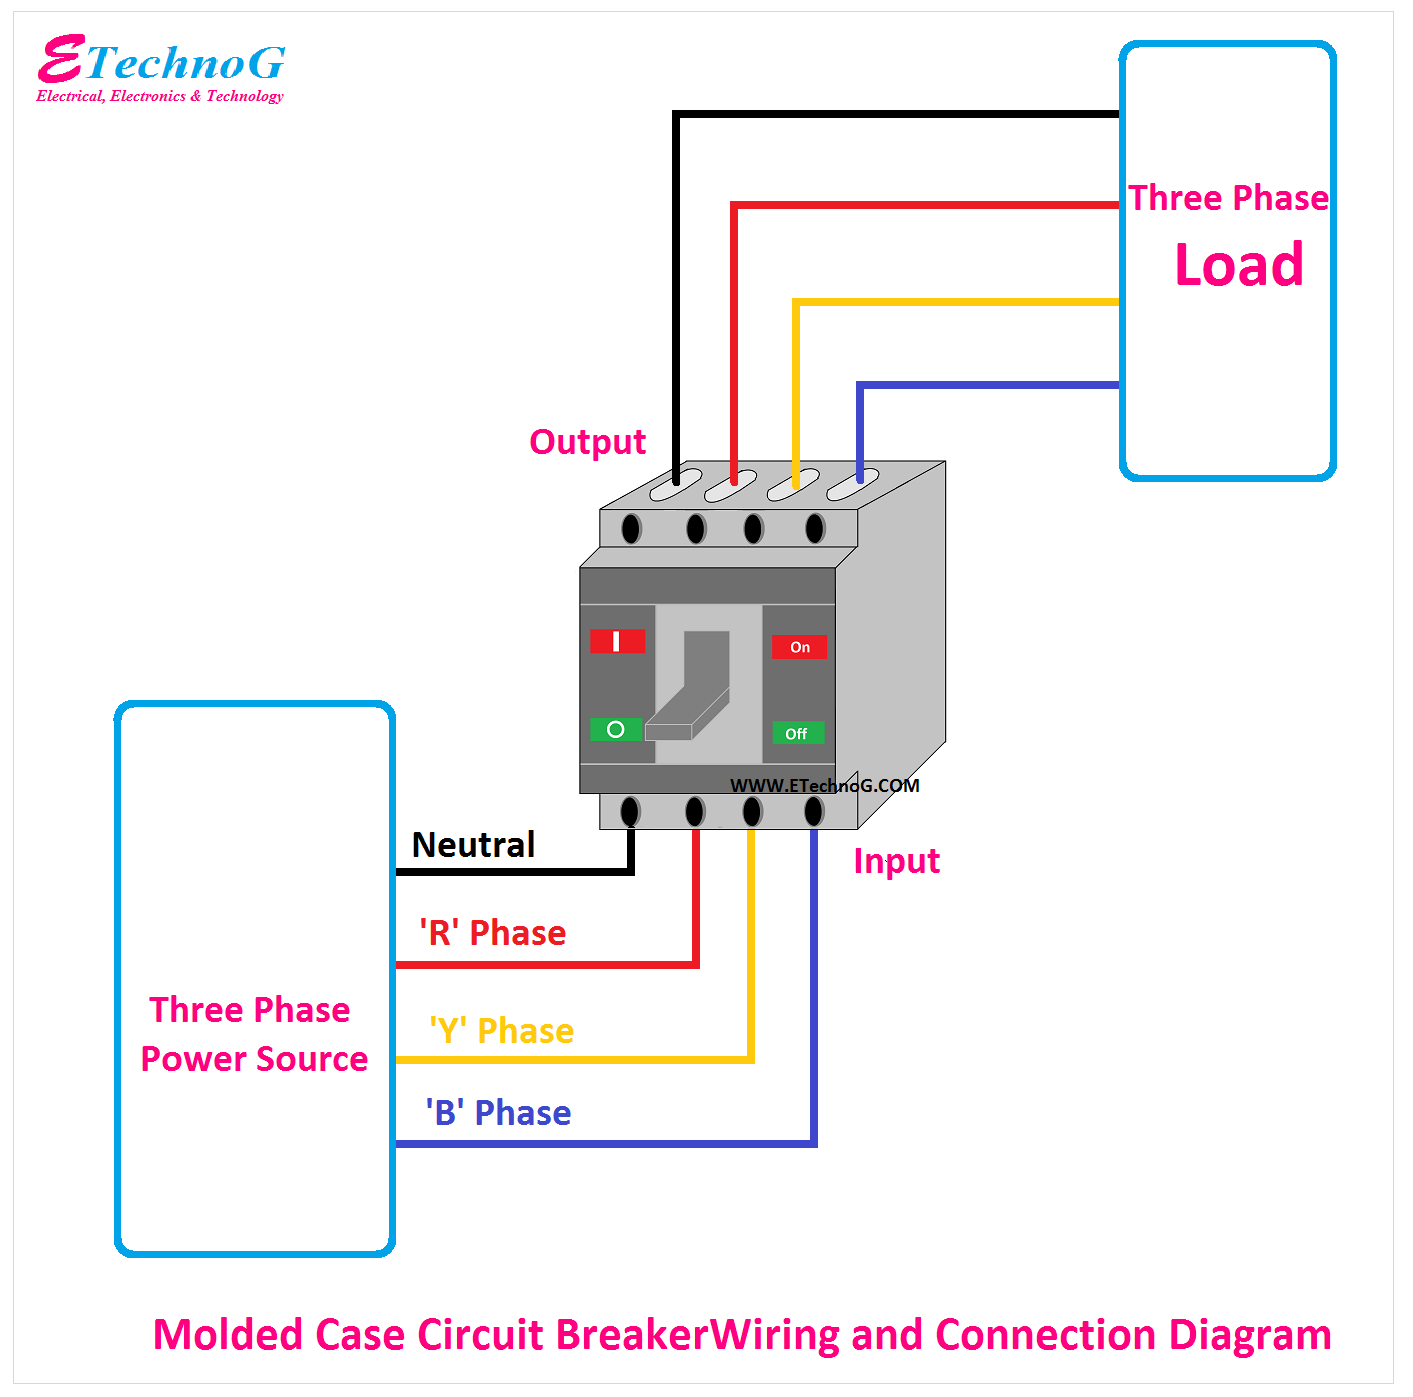 Molded Case Circuit Breaker Wiring and Connection Diagram, circuit breaker connection, wiring of circuit breaker